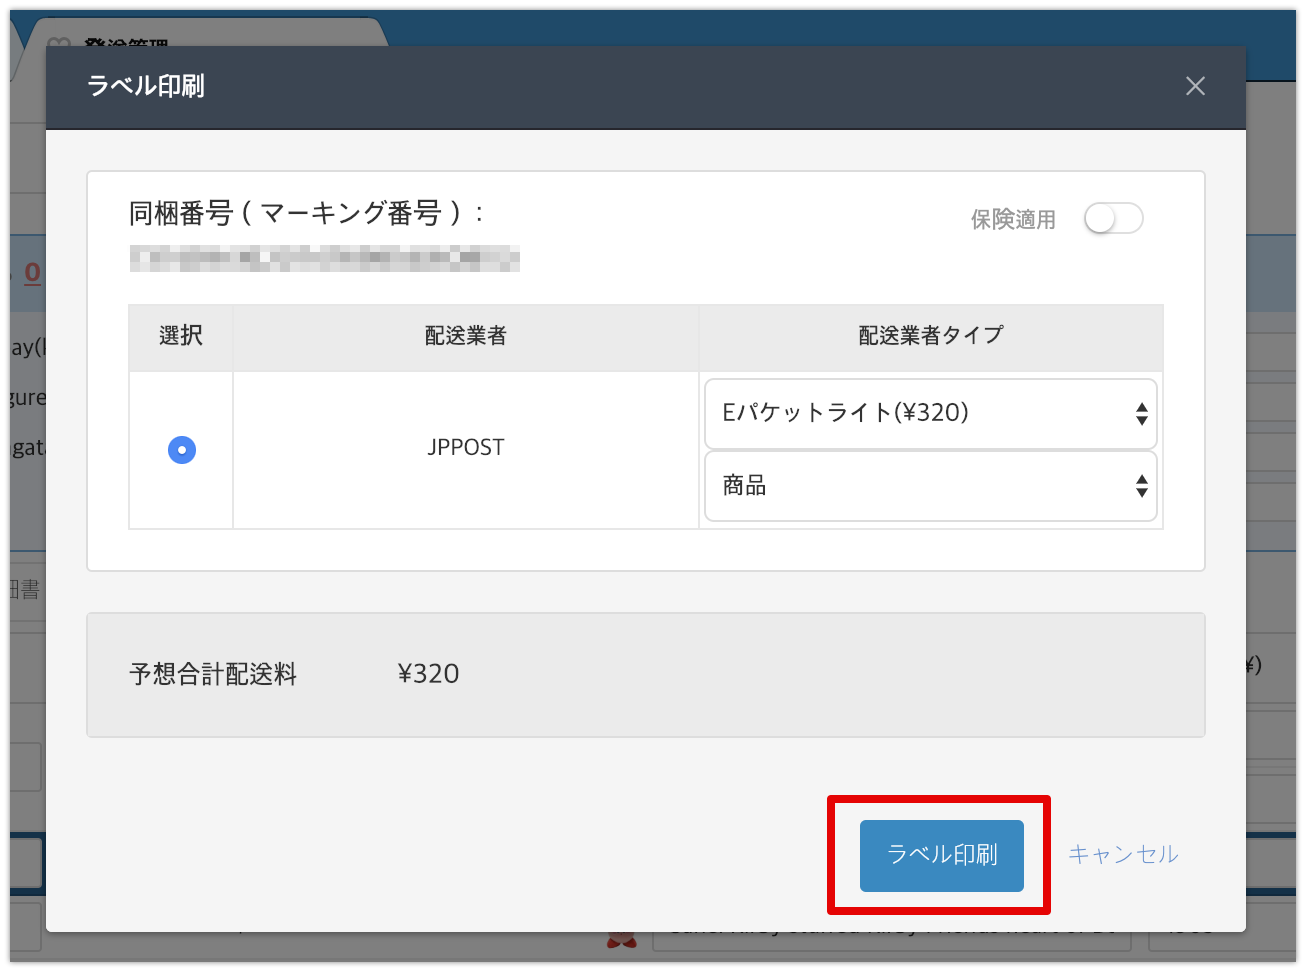 ebay認定のシッピングツール【hirogete】で送り状を発行する方法を紹介 